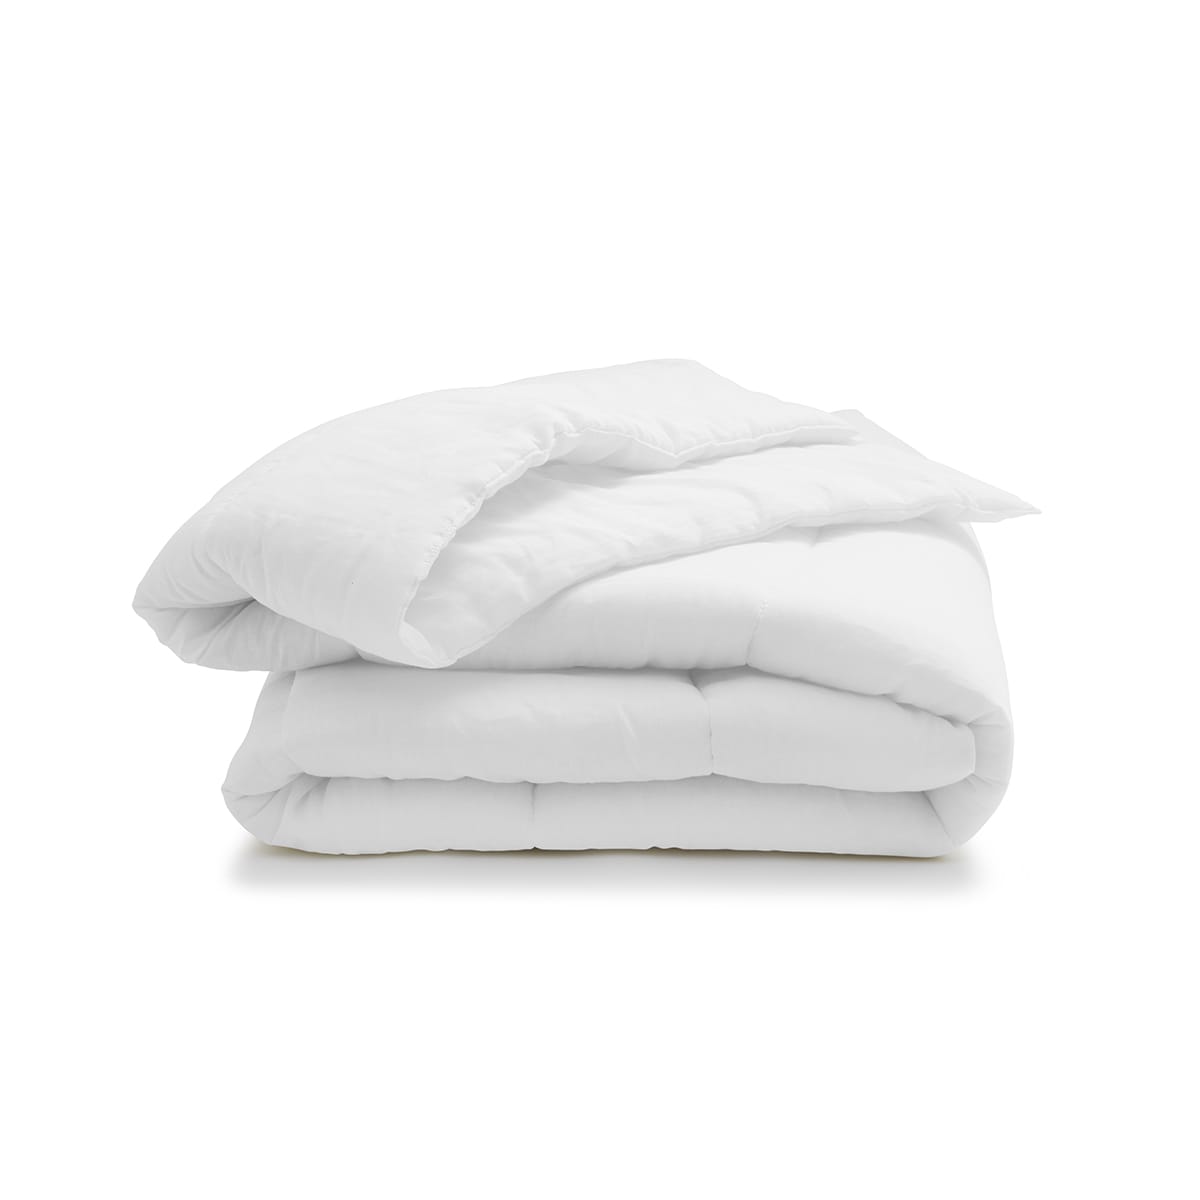 Medium Warmth All Seasons Quilt - Queen Bed, White - Kmart